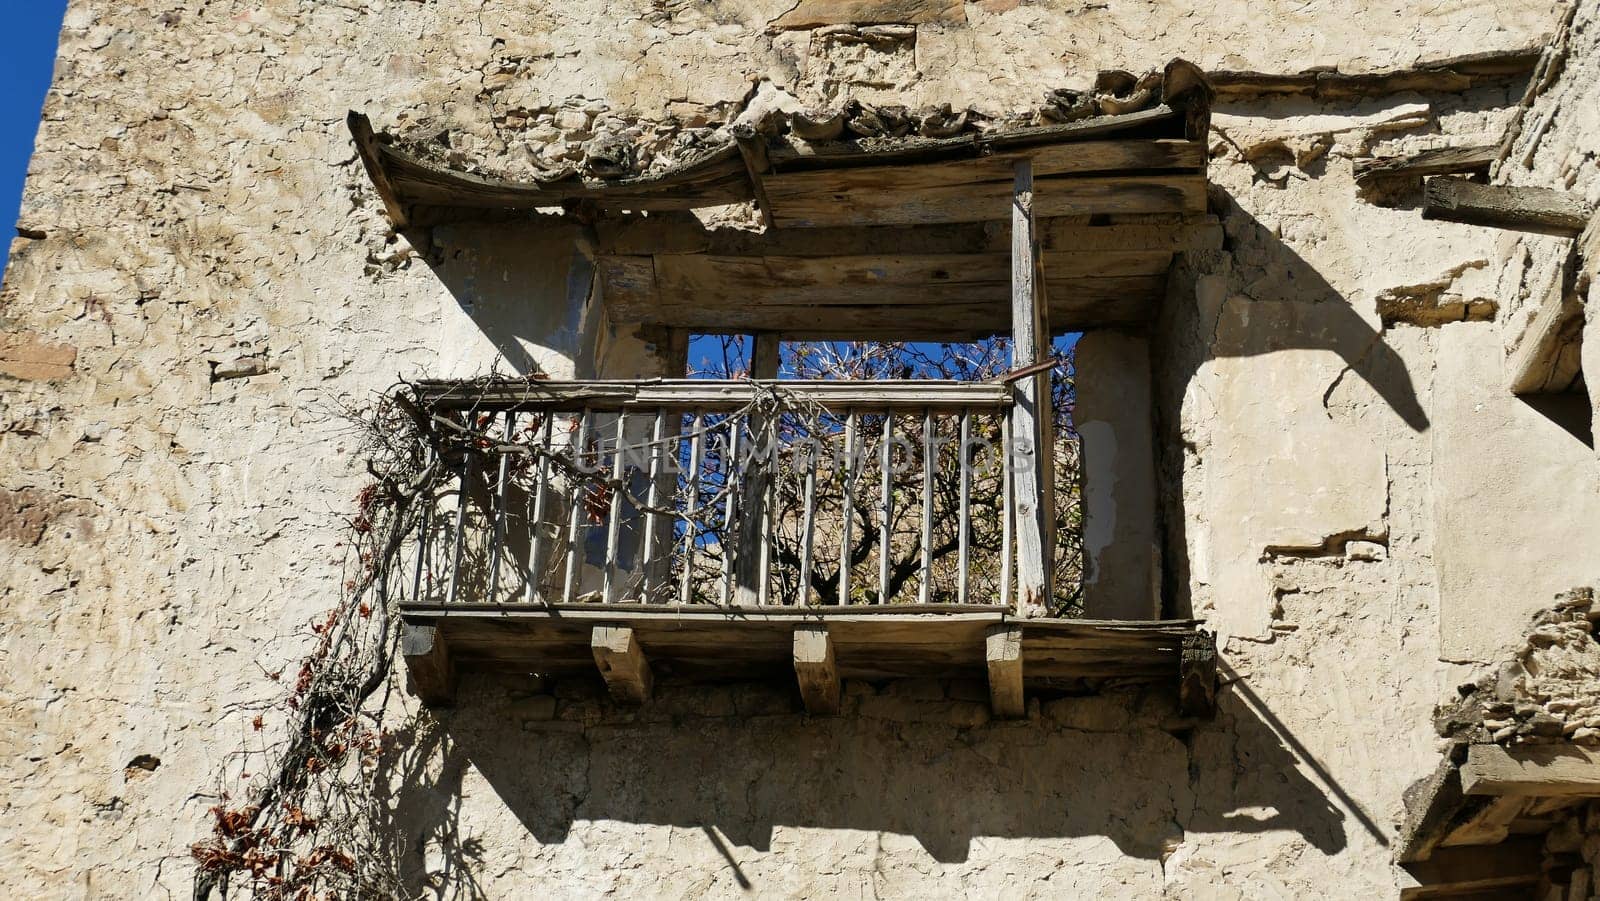 Balcony in an uninhabited village in the ruins of Yesa in Navarre by XabiDonostia